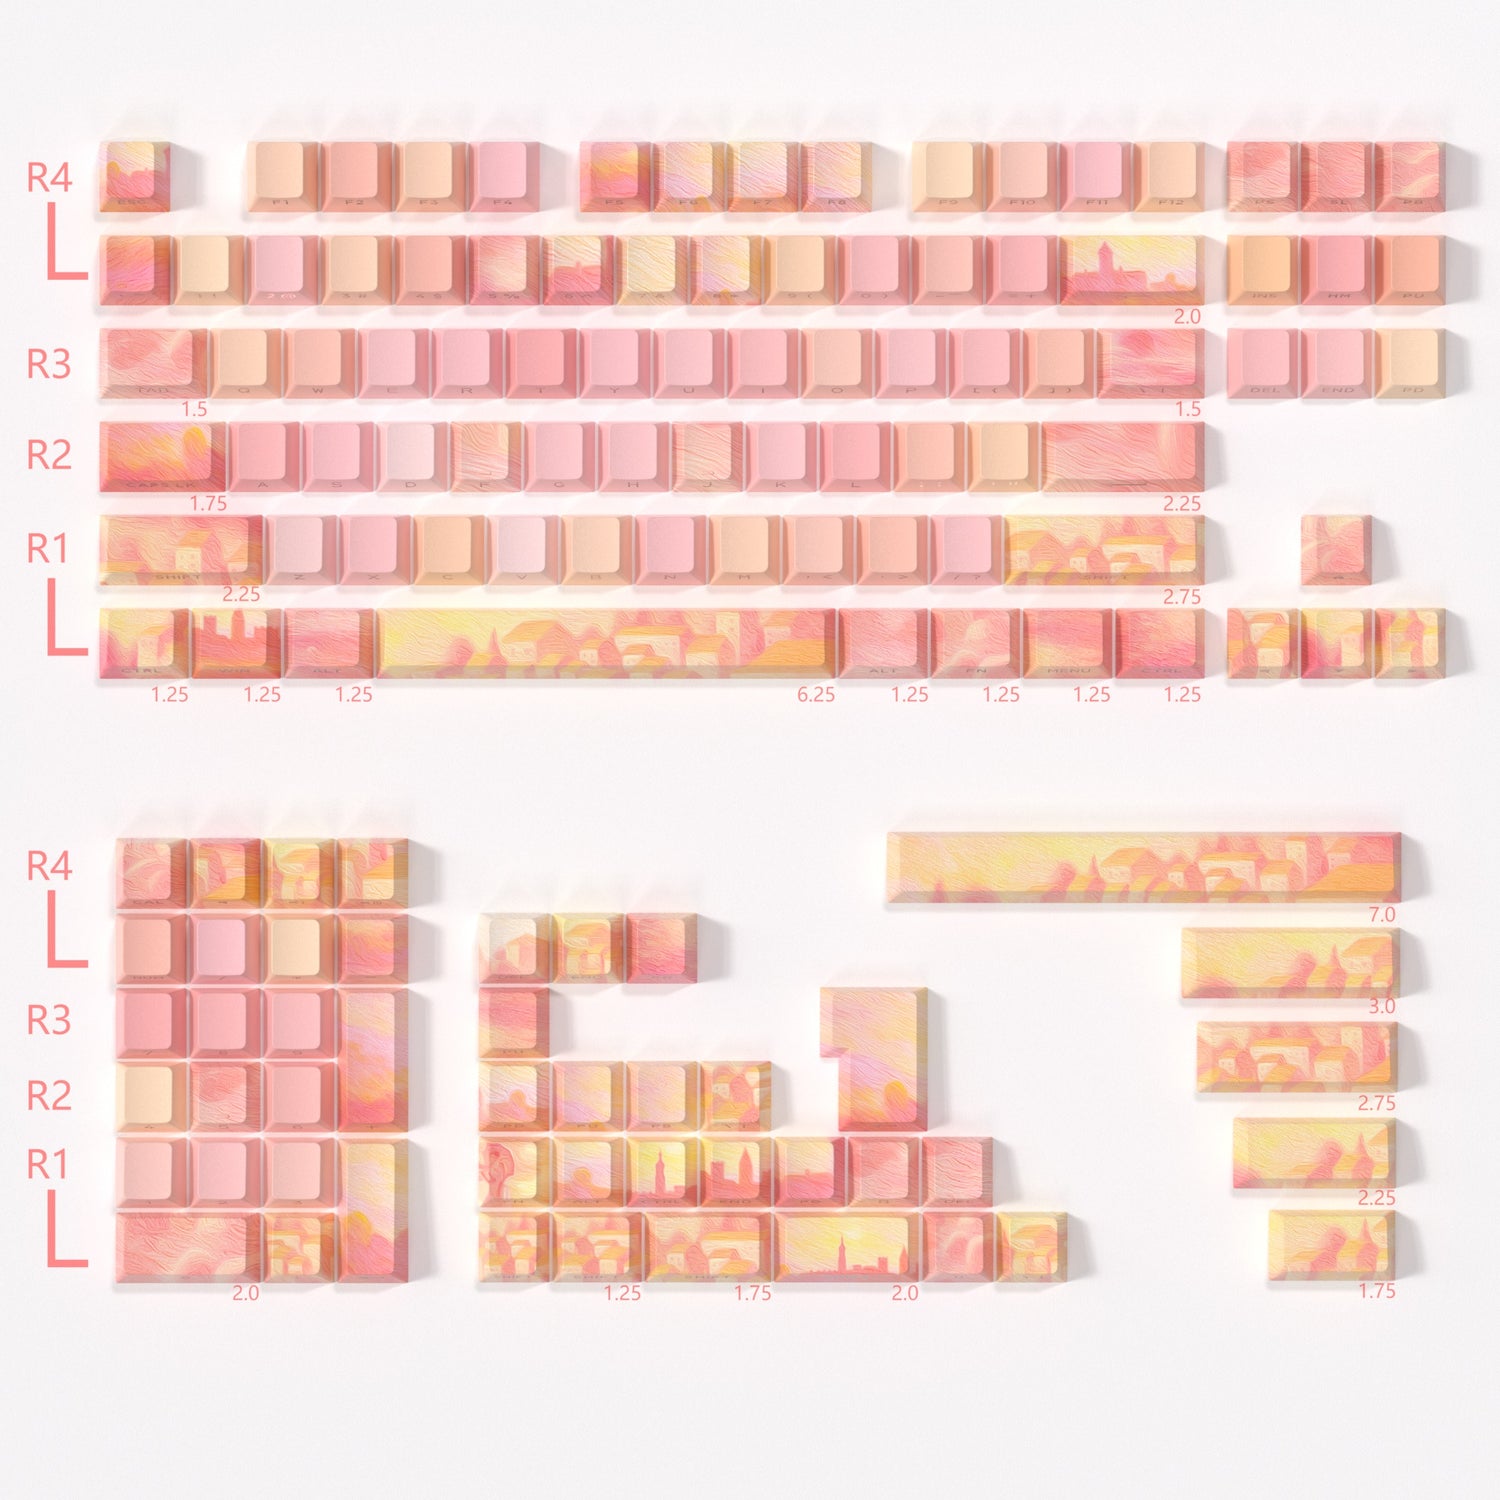 PIIFOX CKC-02 粉色故事粉彩画侧印 OEM 轮廓键帽套装 135 键